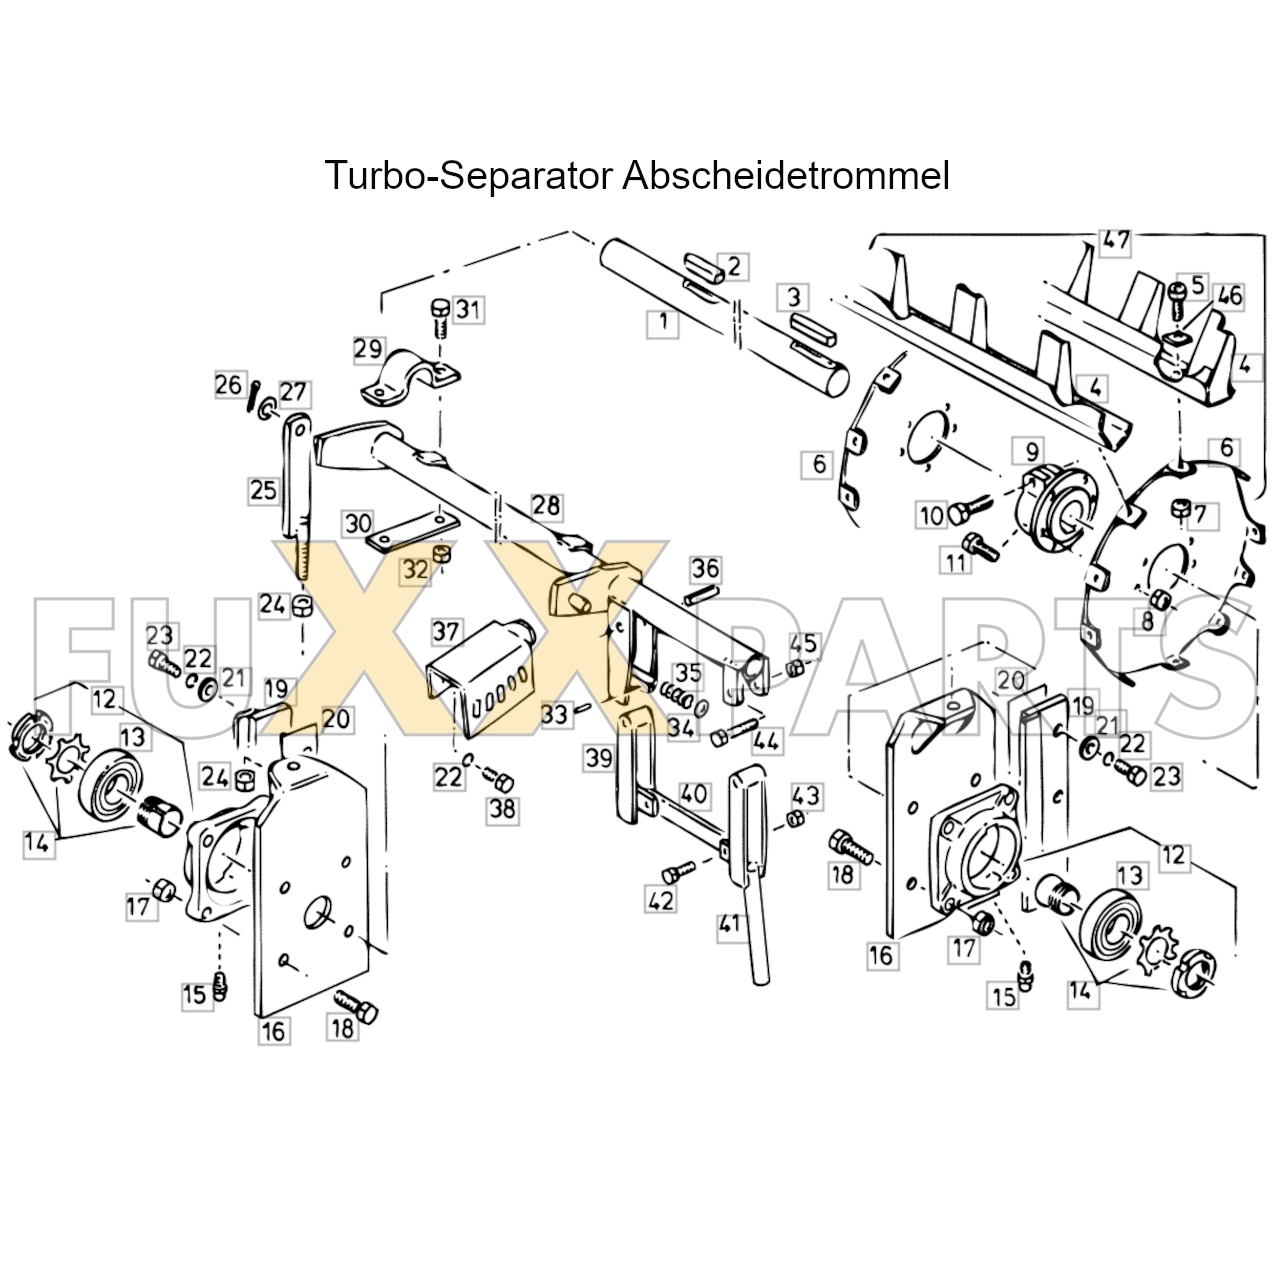 4080 Turbo-Separator Abscheidetrommel_copy